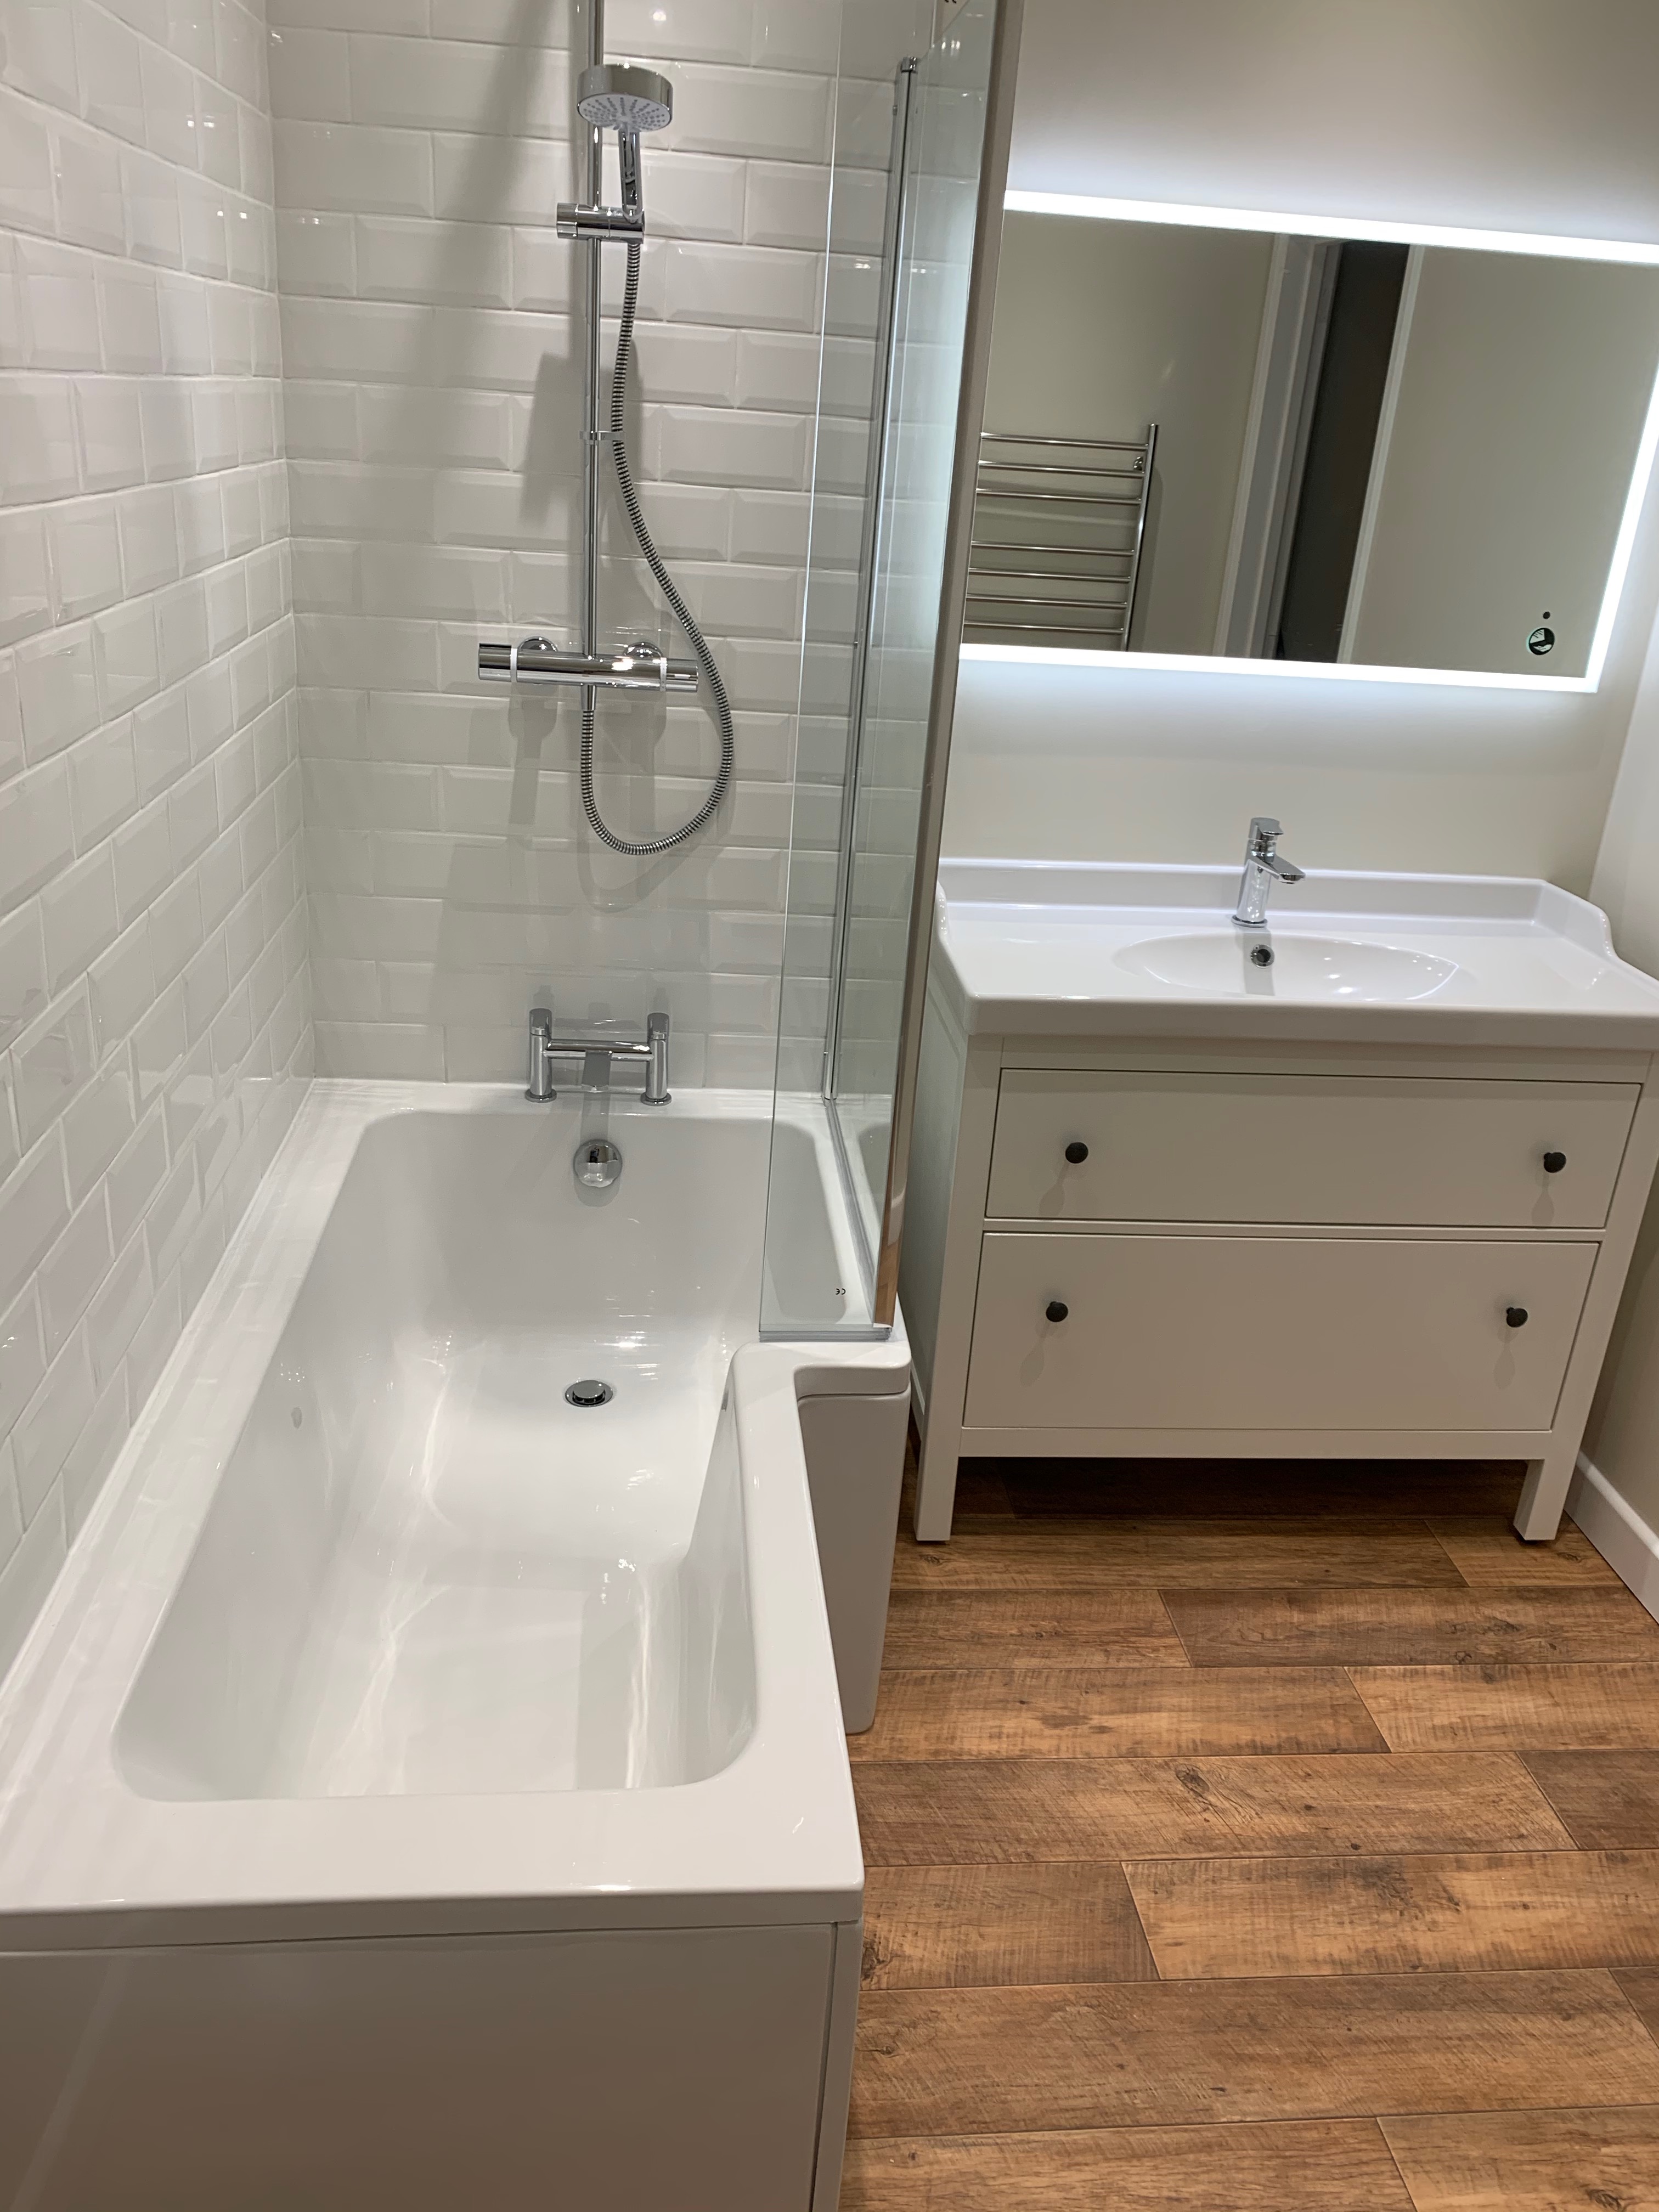 Bathroom renovation with shower bath